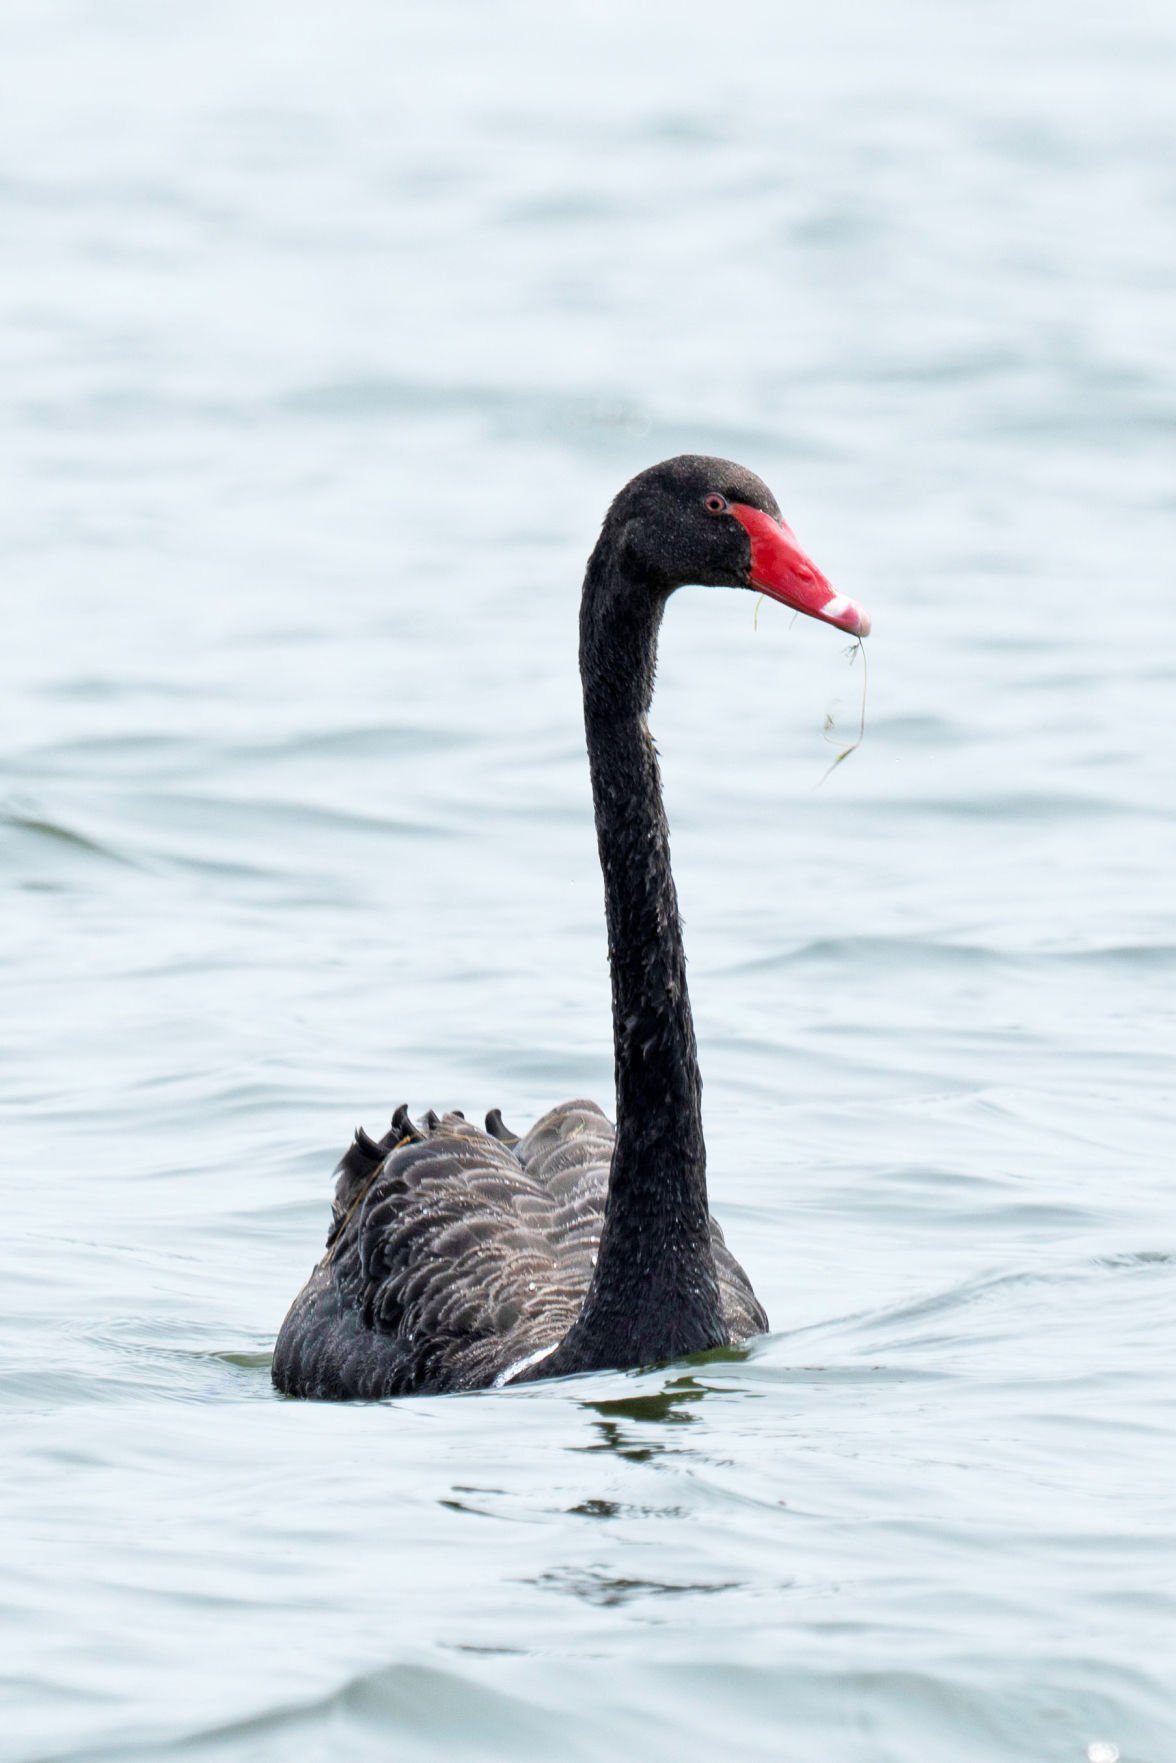 Black swan: Rare bird making waves as residents wonder it came | Local | journaltimes.com